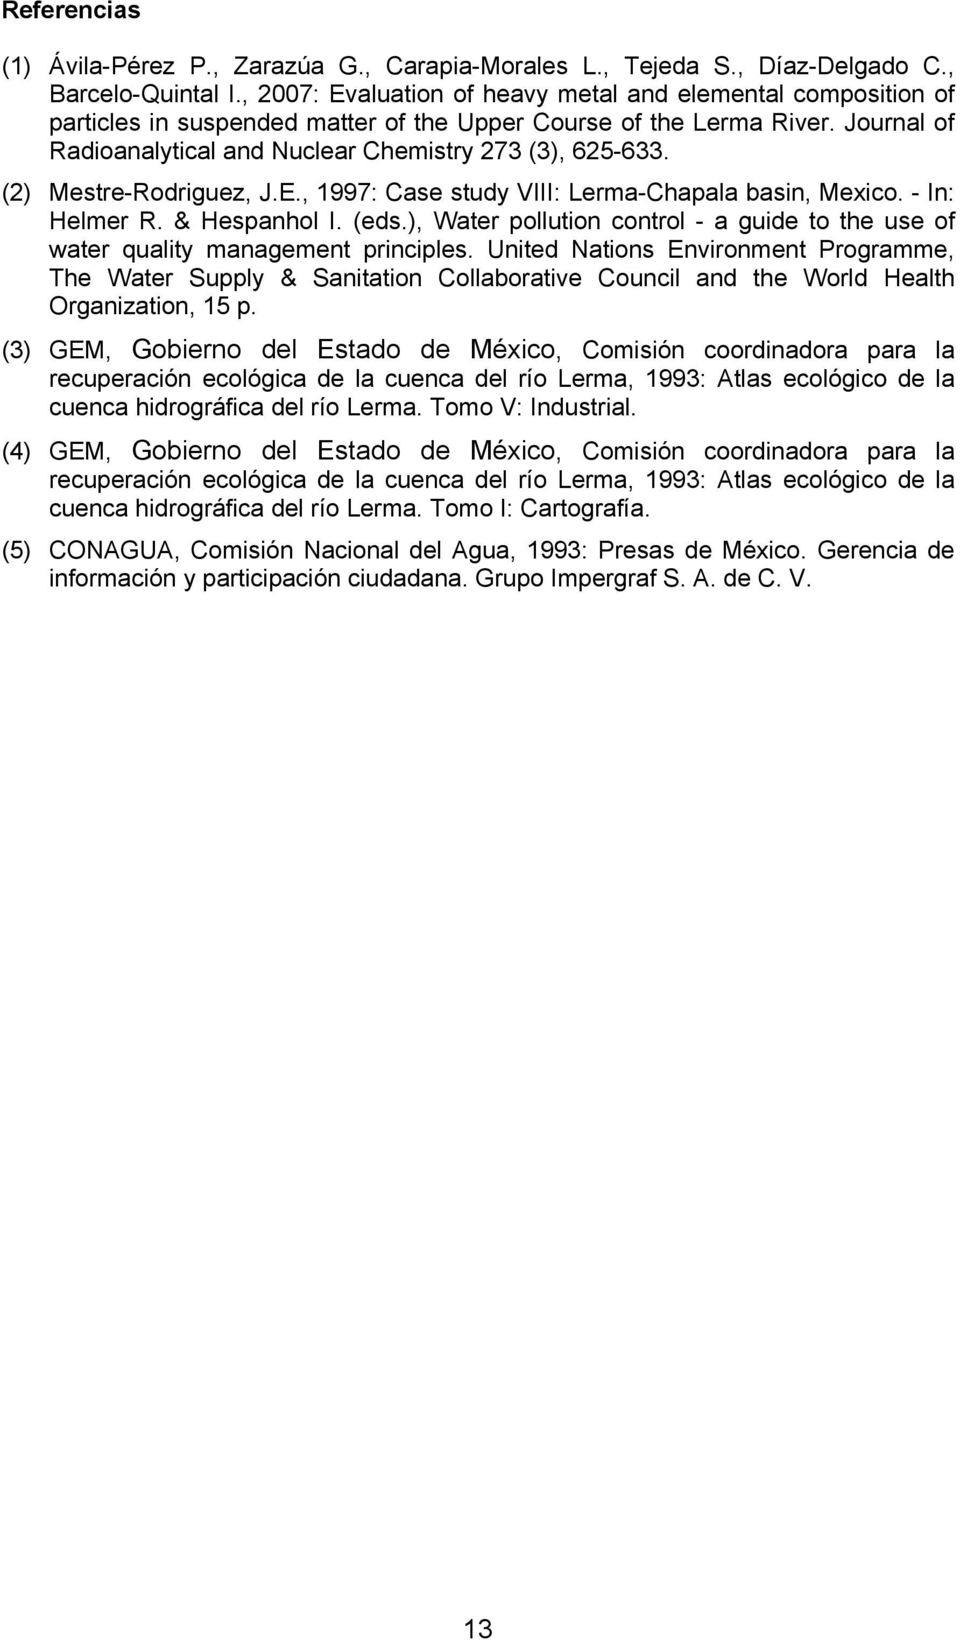 (2) Mestre-Rodriguez, J.E., 1997: Case study VIII: Lerma-Chapala basin, Mexico. - In: Helmer R. & Hespanhol I. (eds.